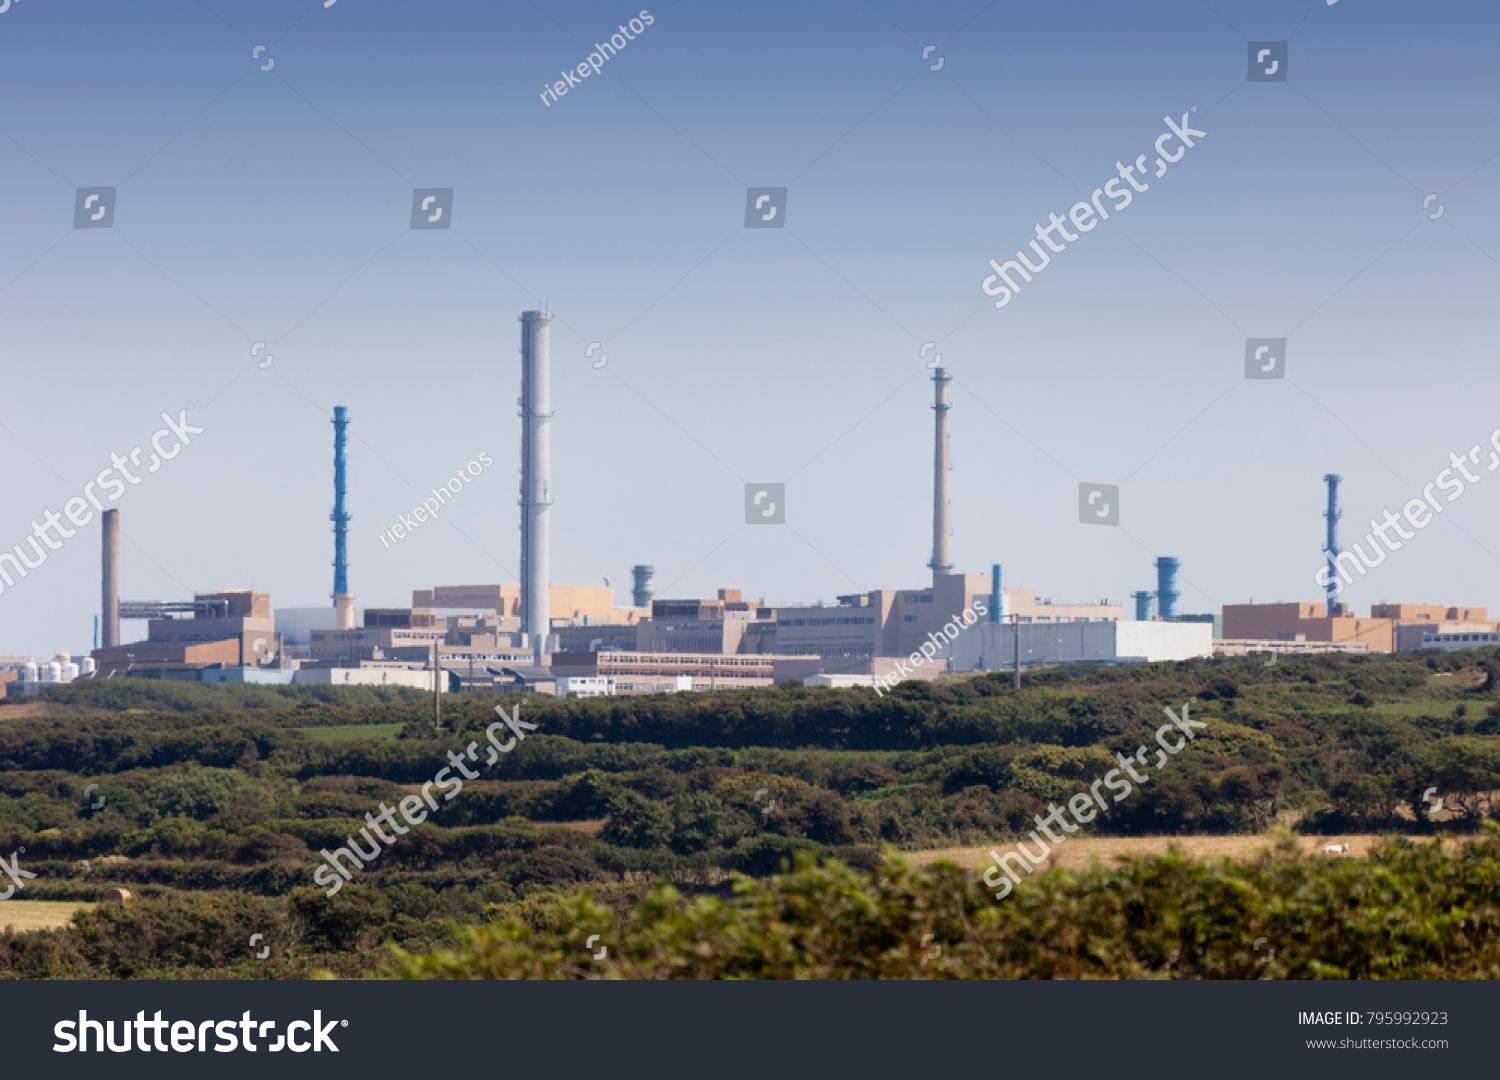 Nuclear fuel reprocessing plant - La Hague, France, Europe #795992923